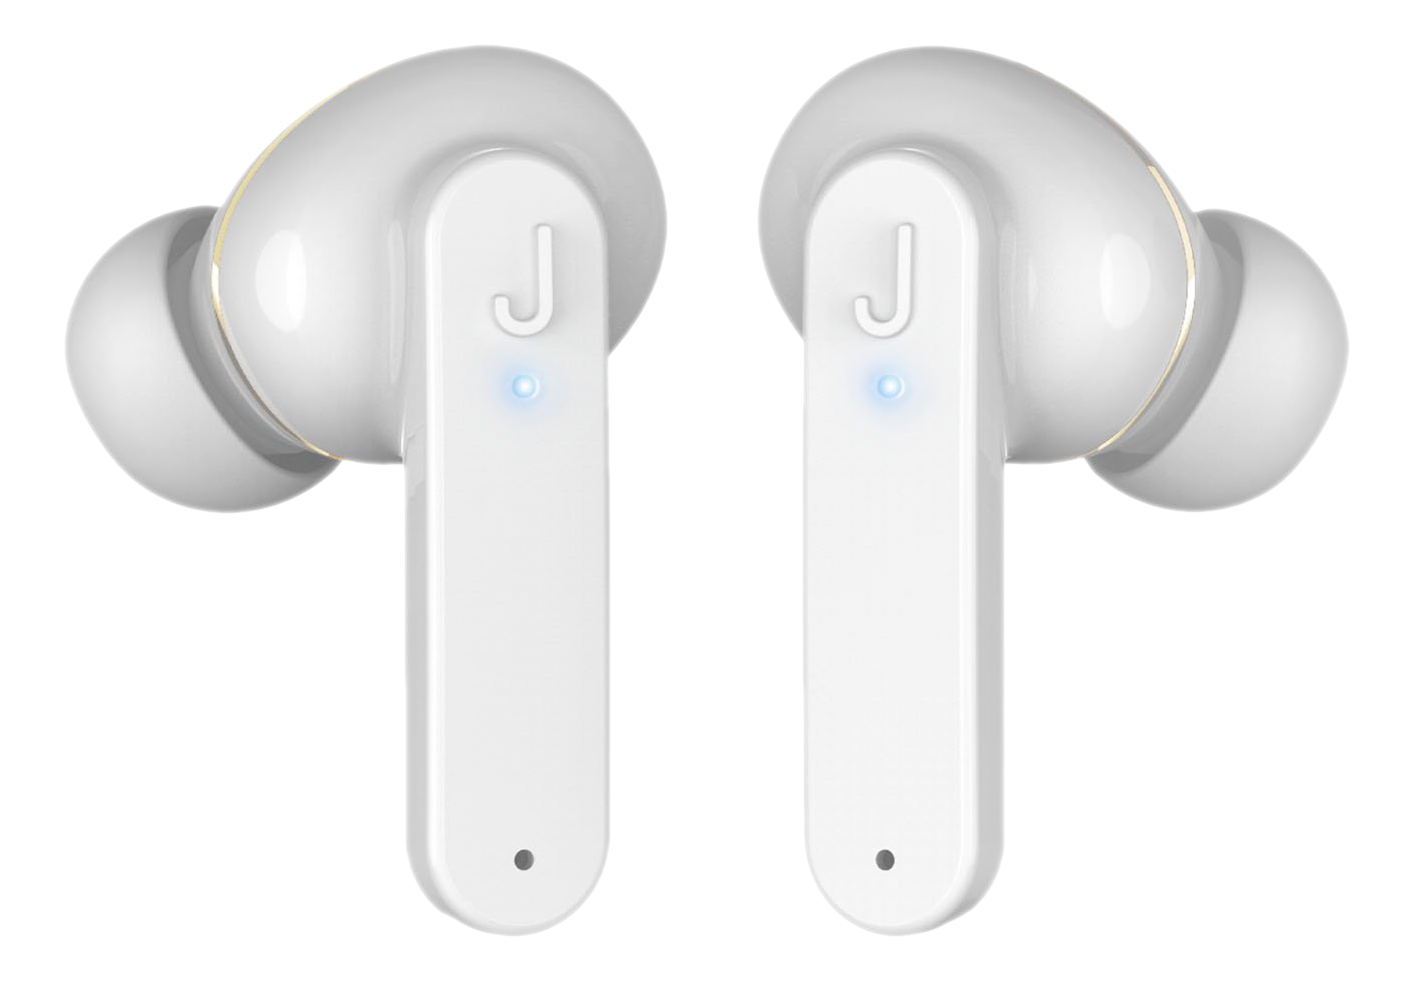 SBS Jaz Loop - Auricolari True Wireless (In-ear, Bianco)